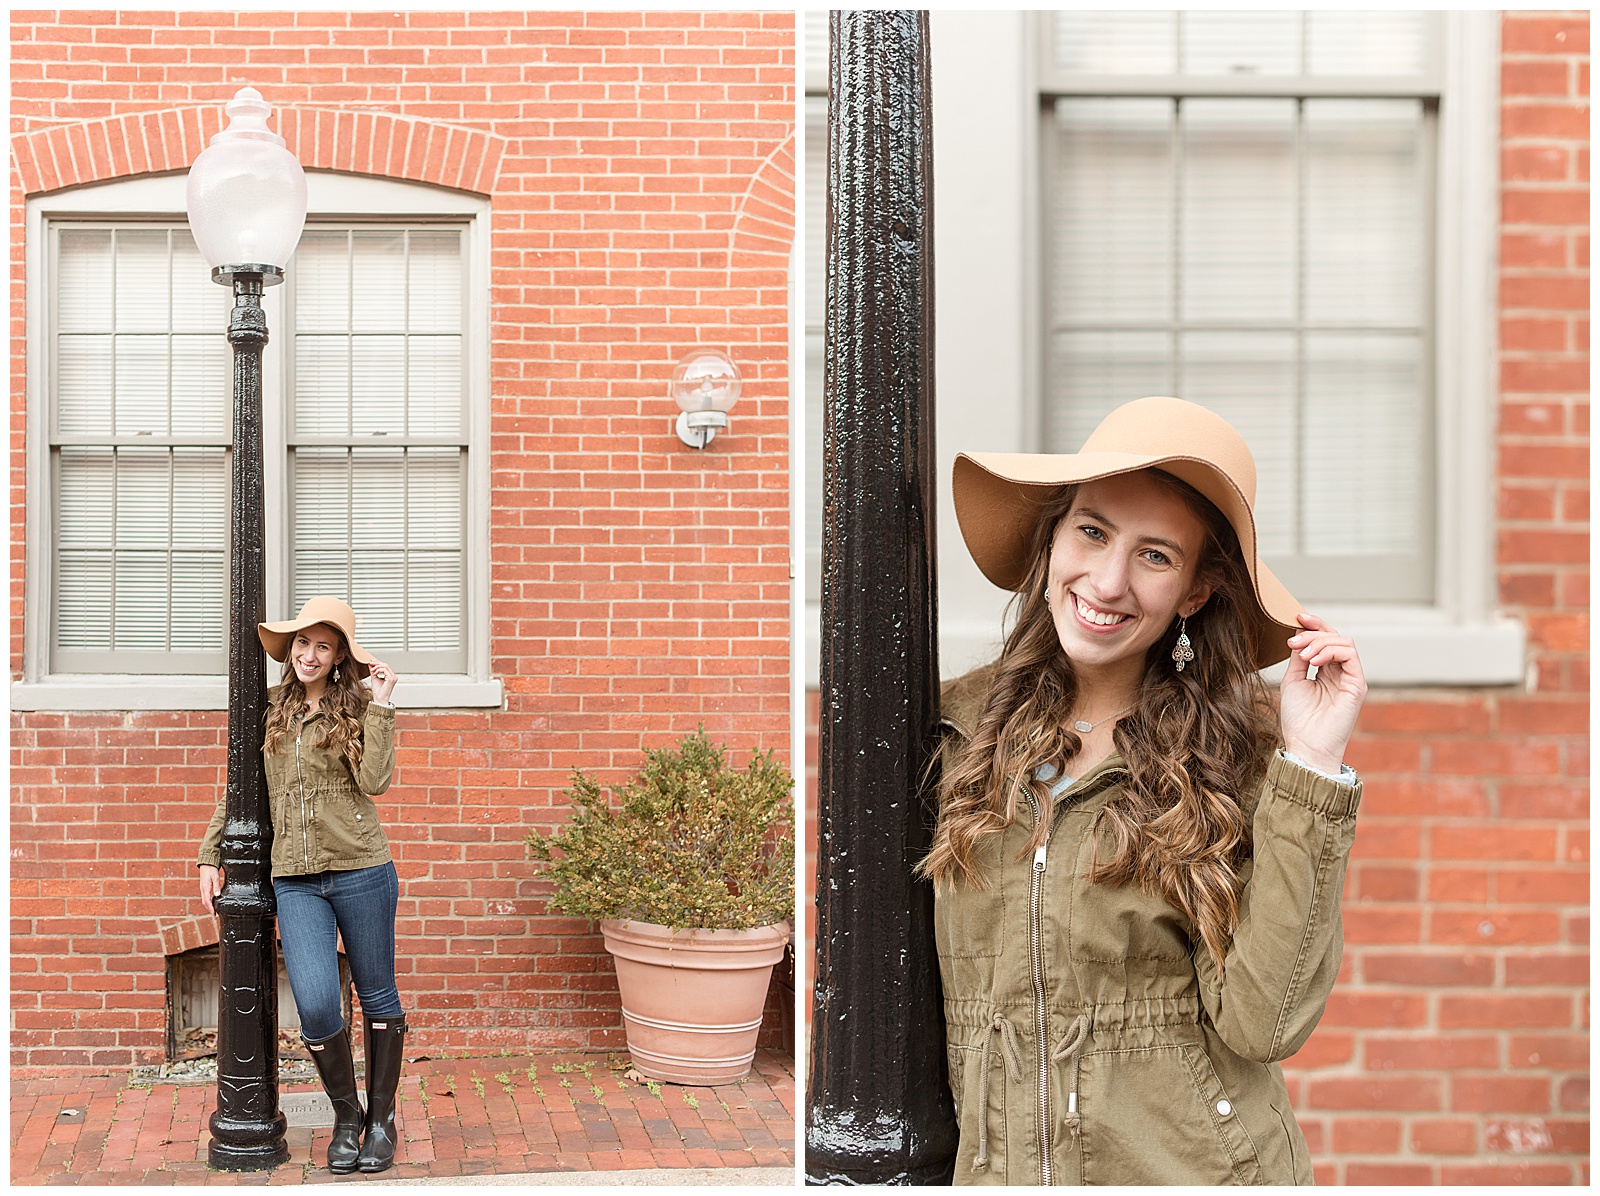 senior girl holding on to floppy hat and standing beside street lamp post